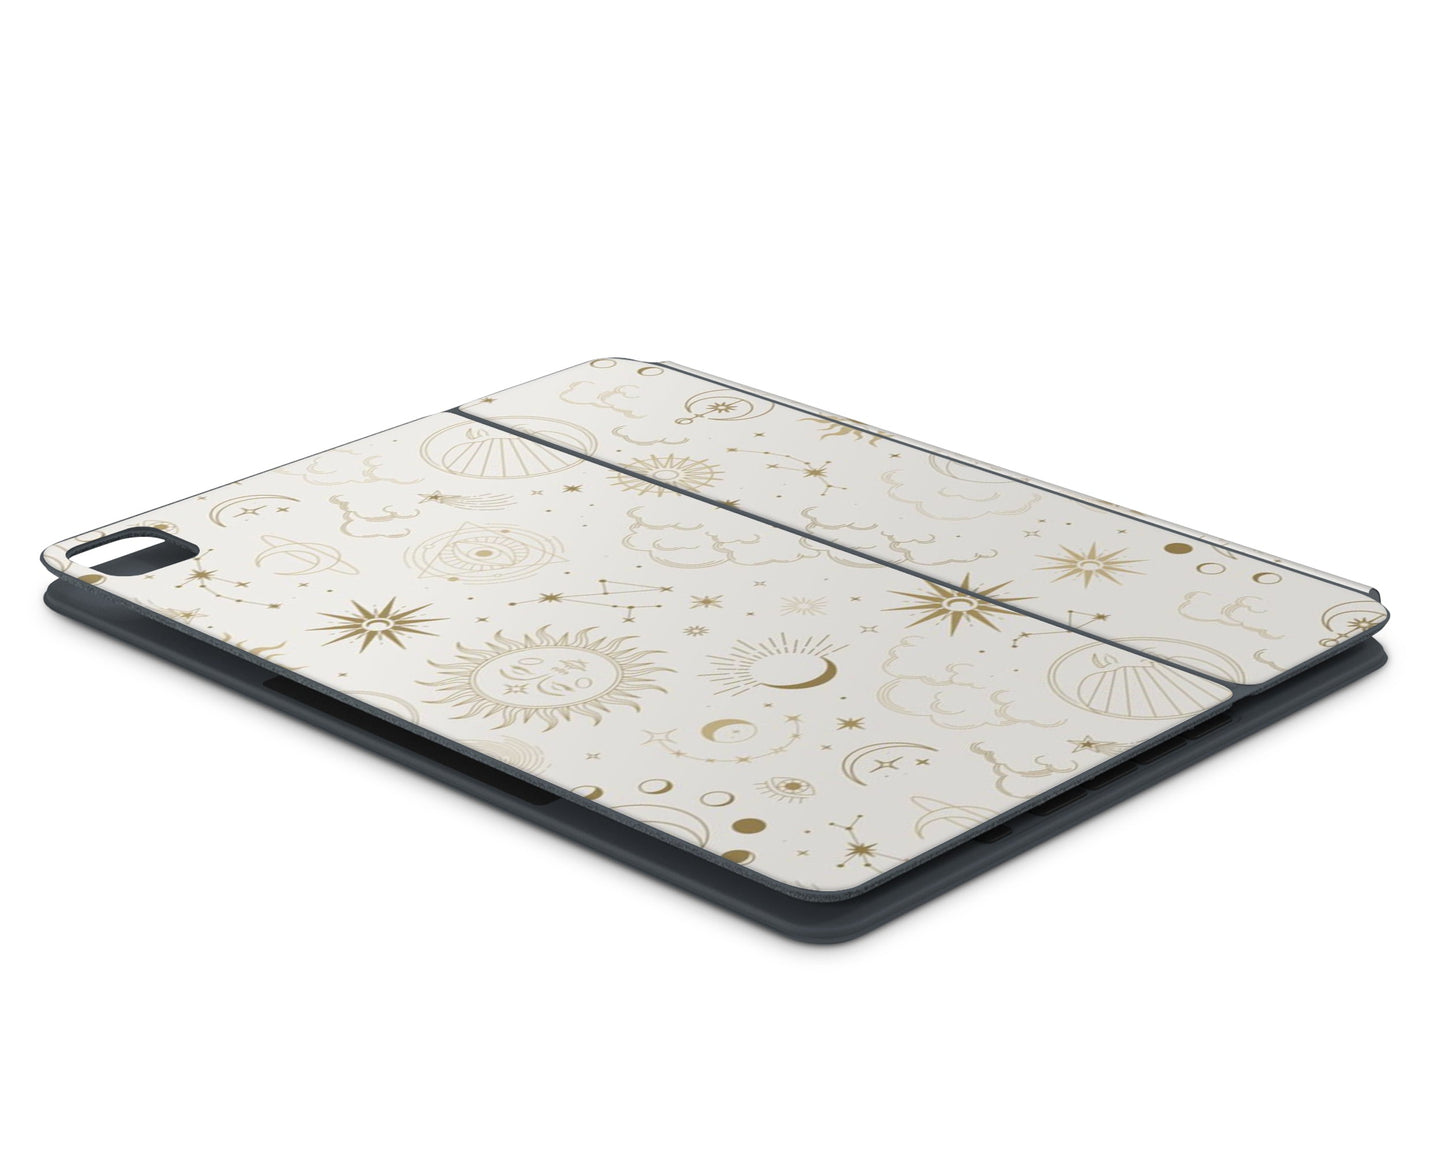 Lux Skins Magic Keyboard Constellation Stargazing Day iPad Pro 12.9" Skins - Pattern Galaxy Skin